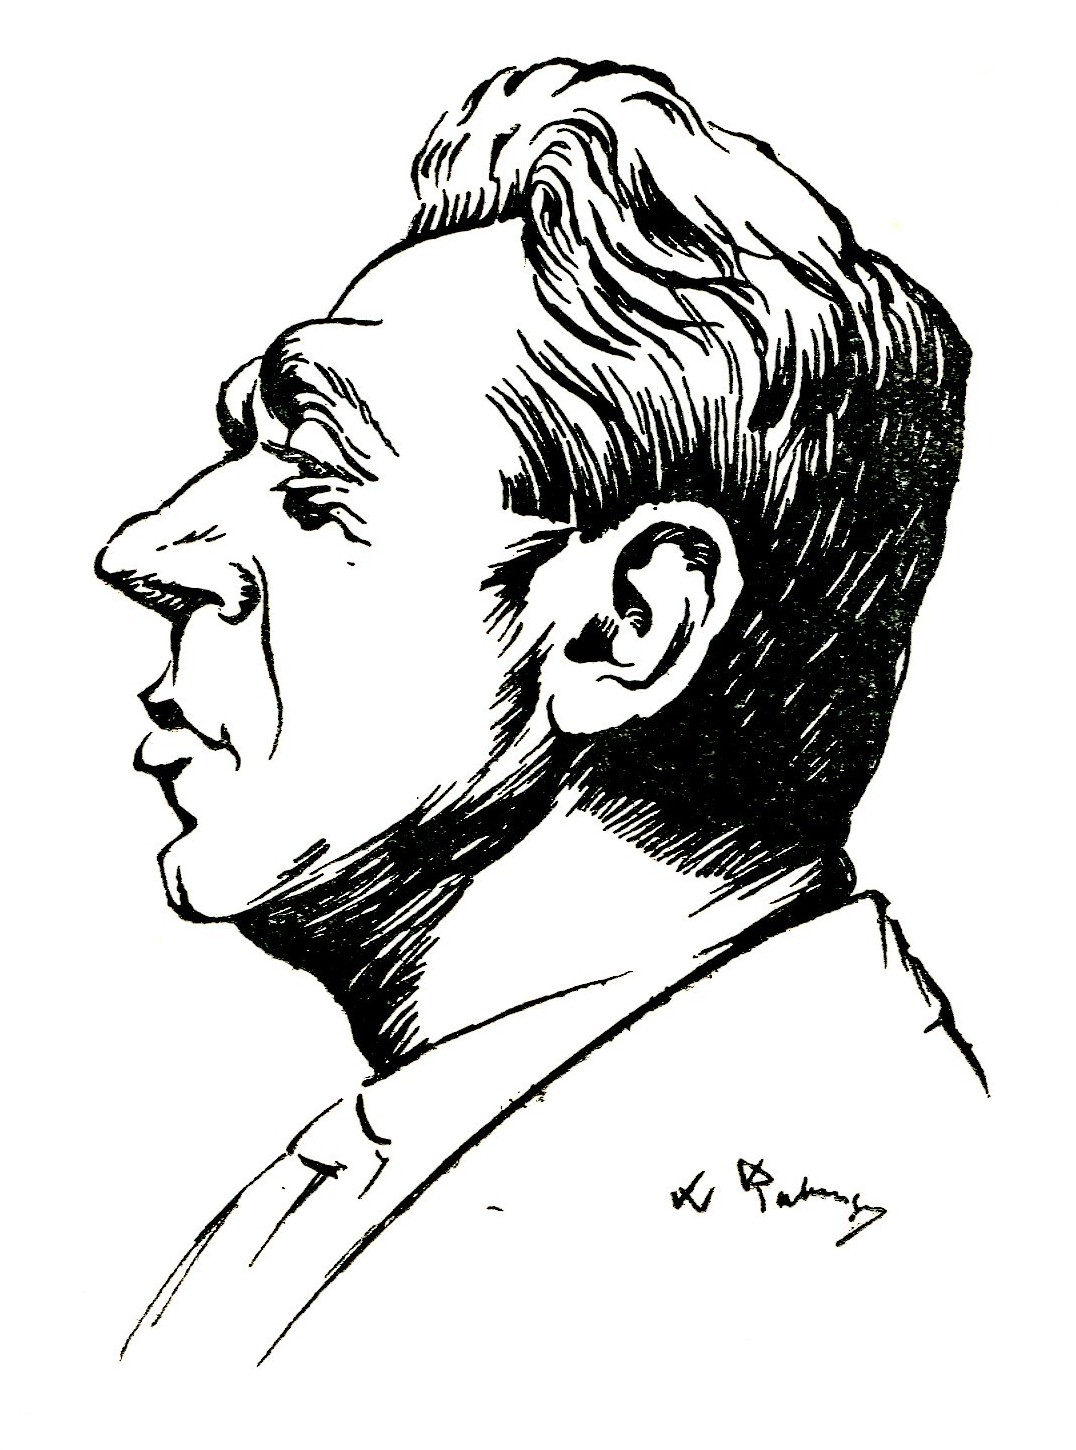 
					
						Zeichnung: Hary Rabinger. In: Cahiers luxembourgeois (1926) N° VI, p. 296
					
					
					© Droits réservés/Alle Rechte vorbehalten
					